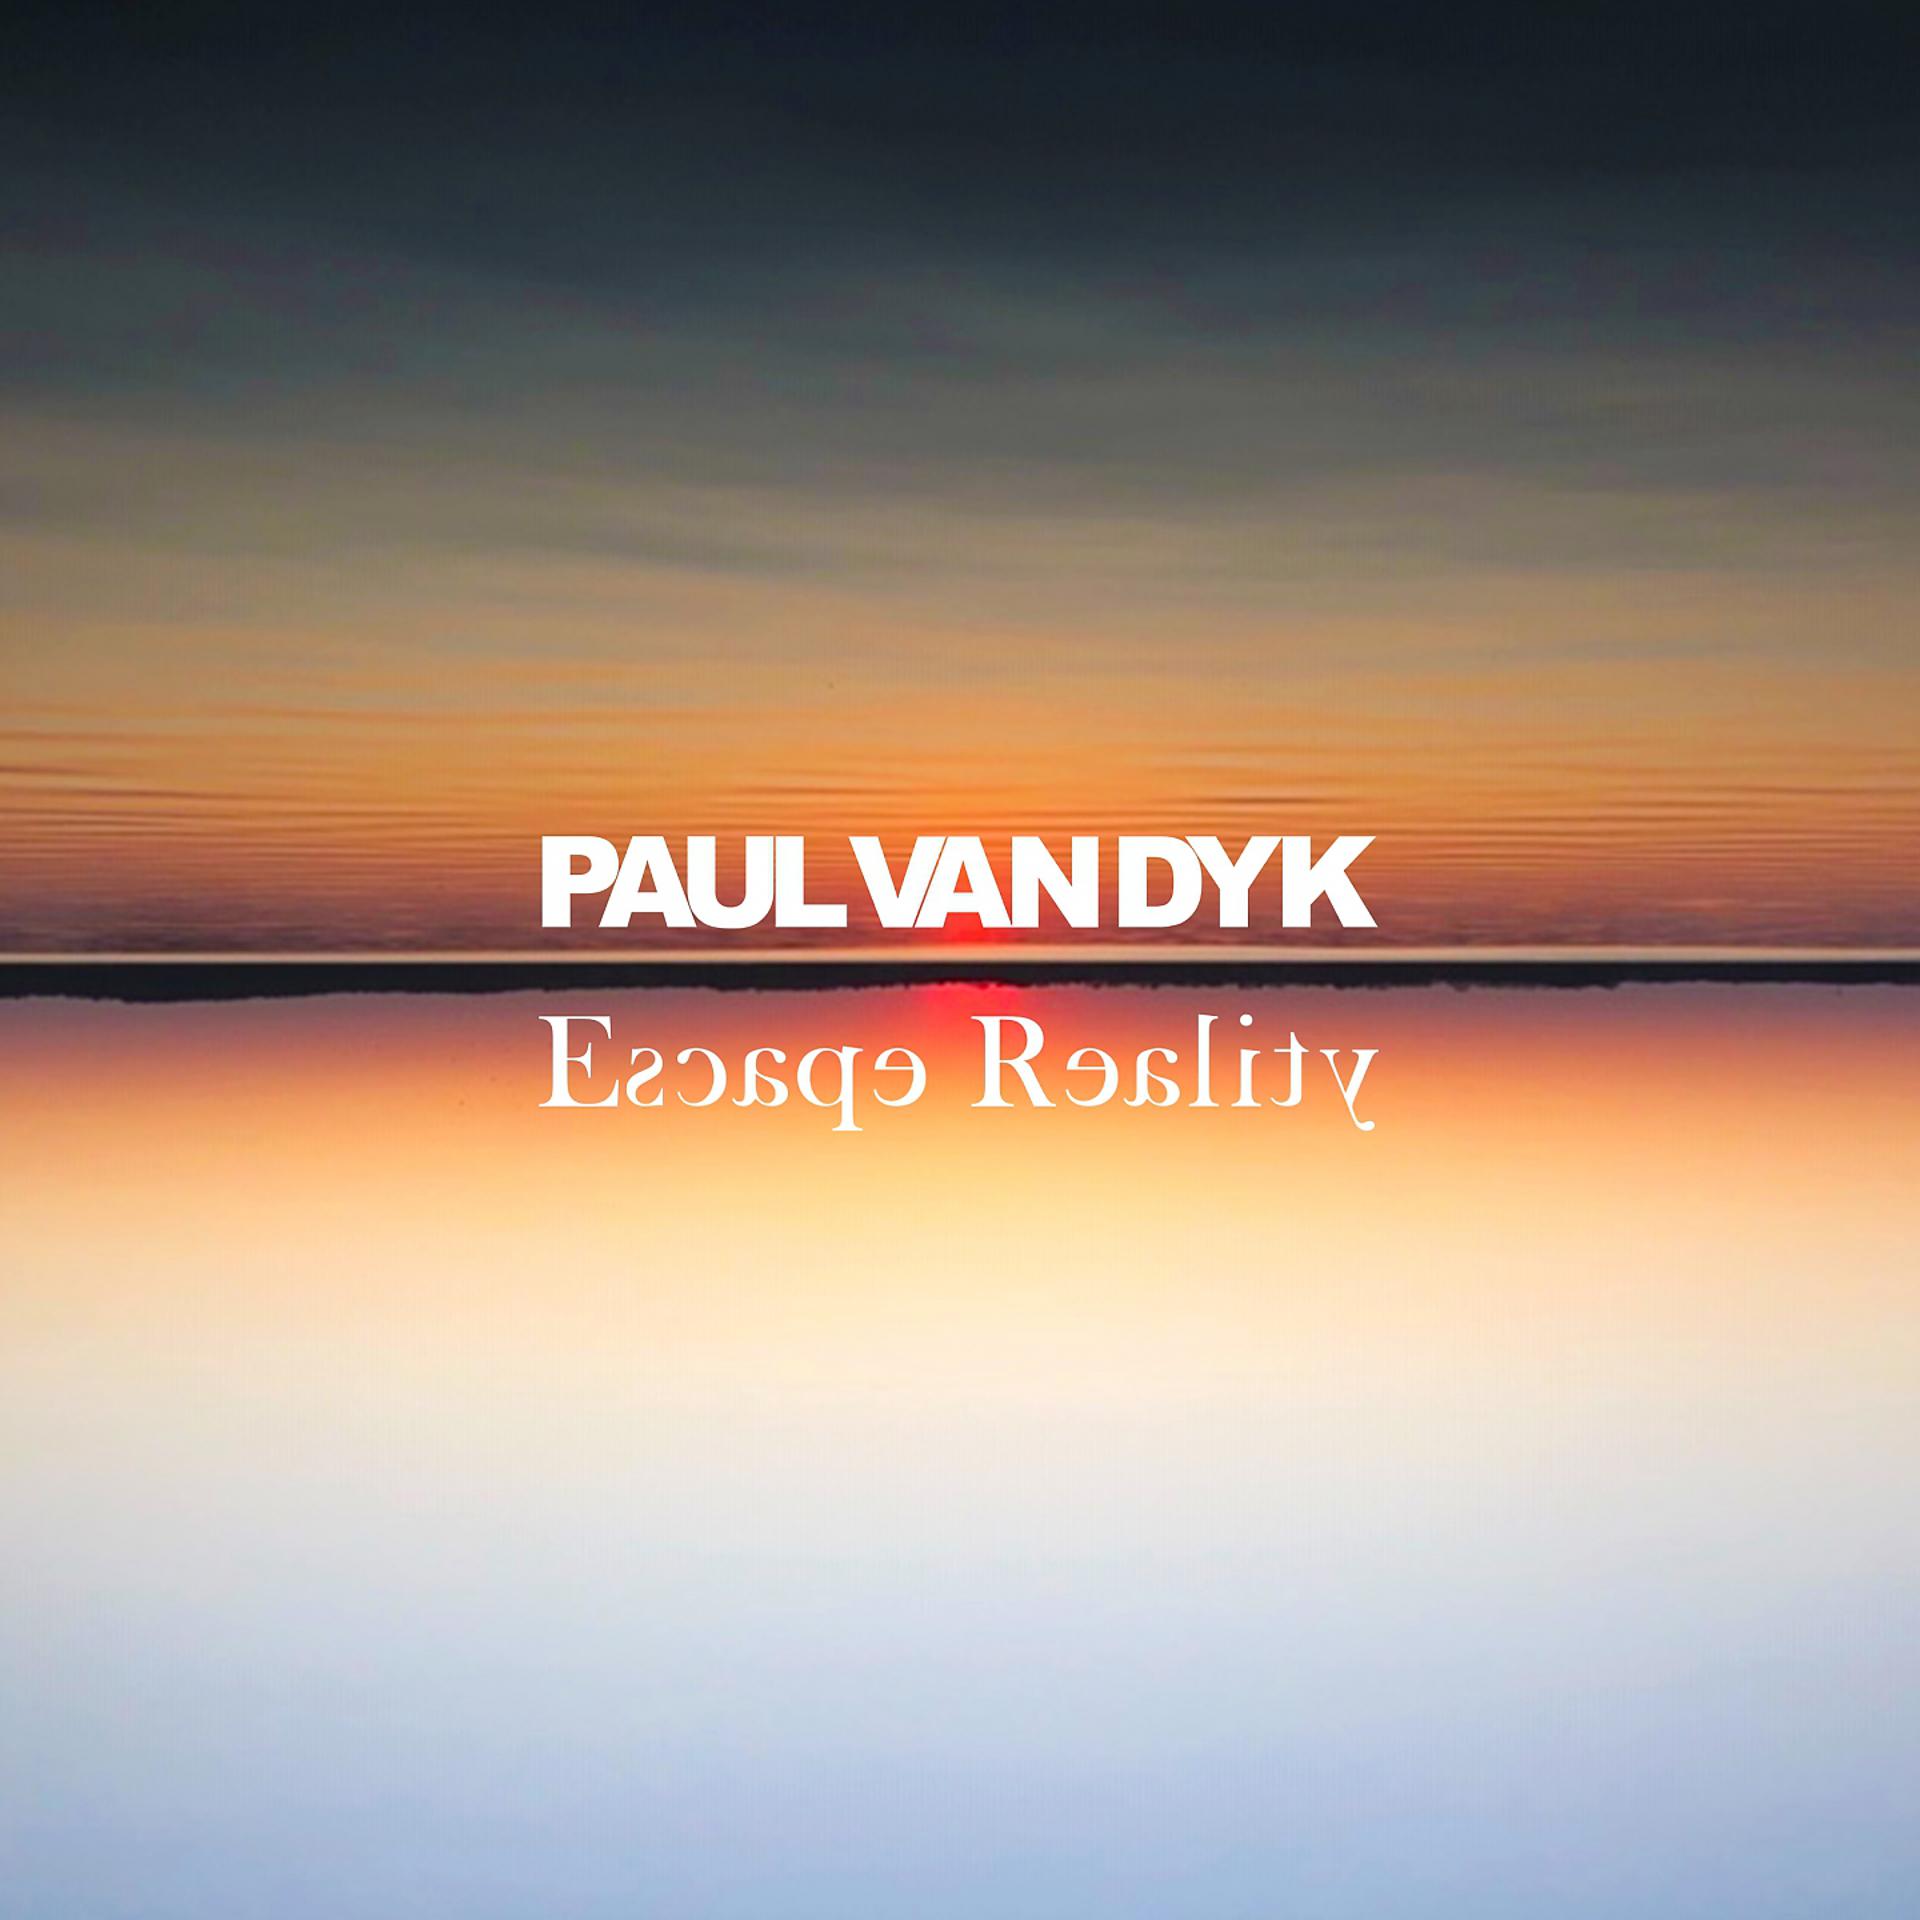 Постер к треку Paul van Dyk, VEGA4 - Time of Our Lives (Escape Mix)